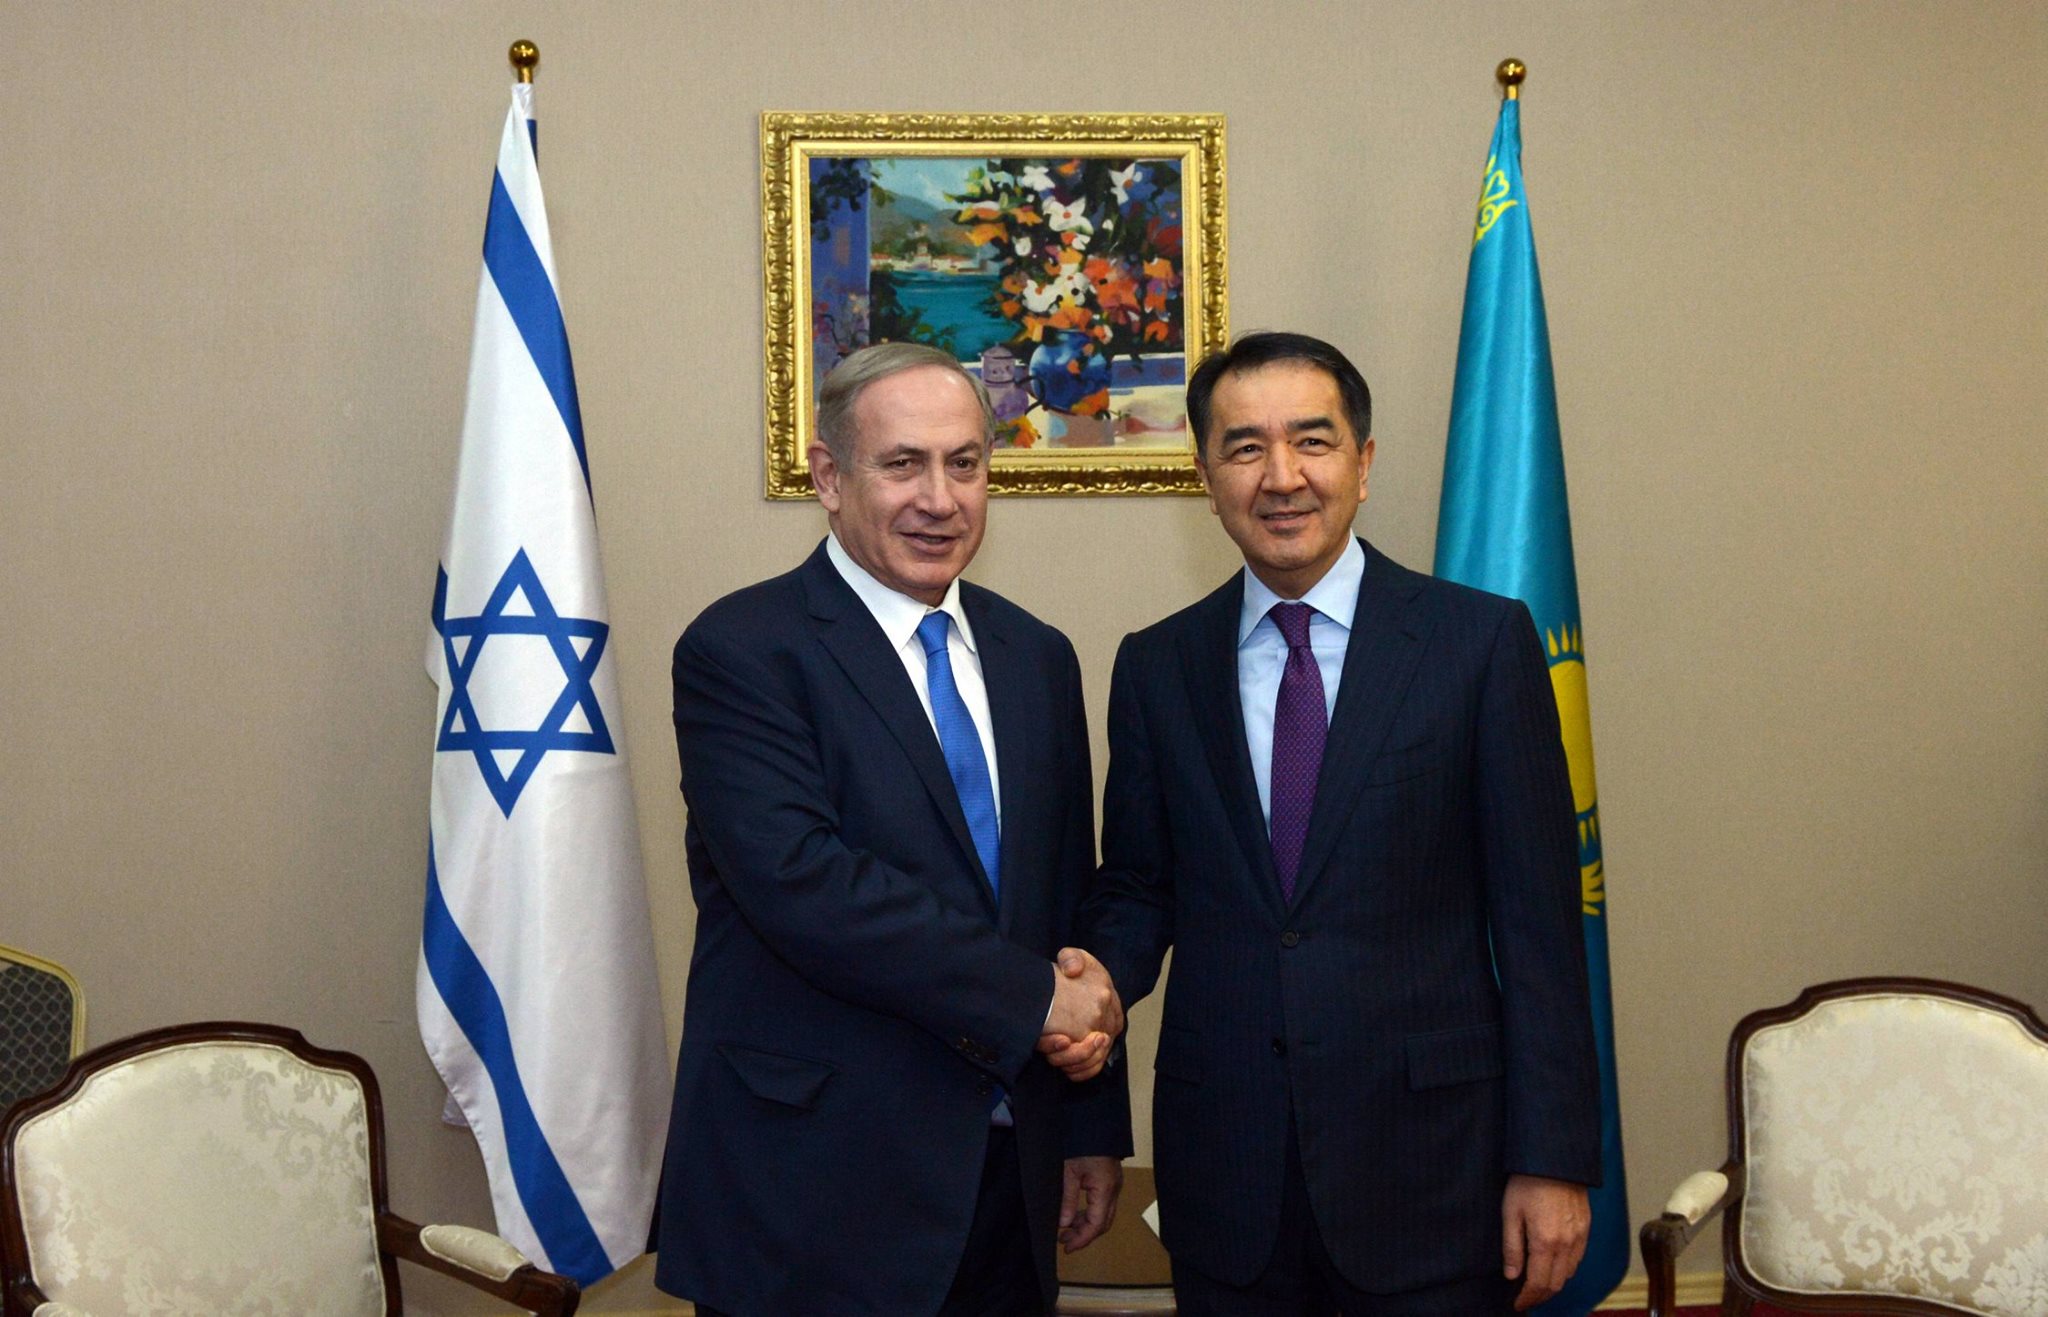 Prime Minister Netanyahu in Kazakhstan